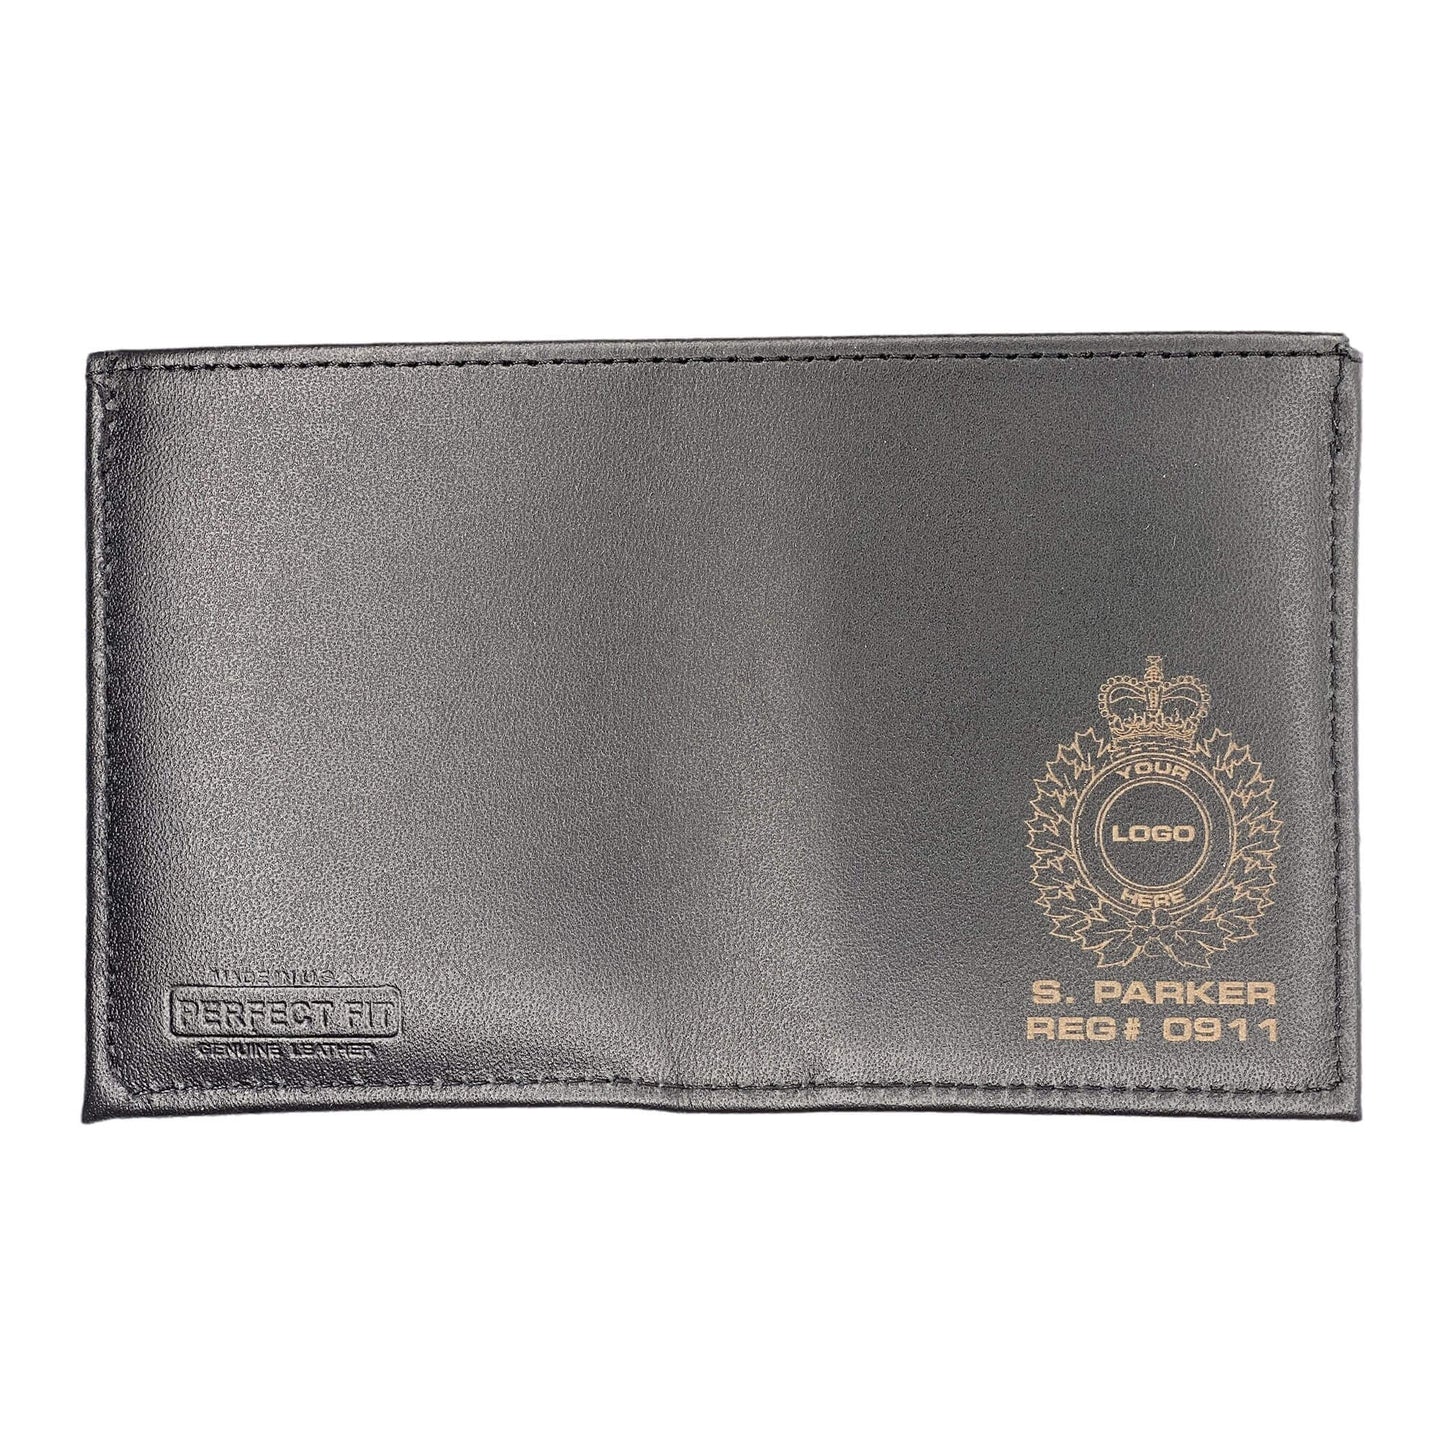 Metropolitan Police UK Badge Wallet